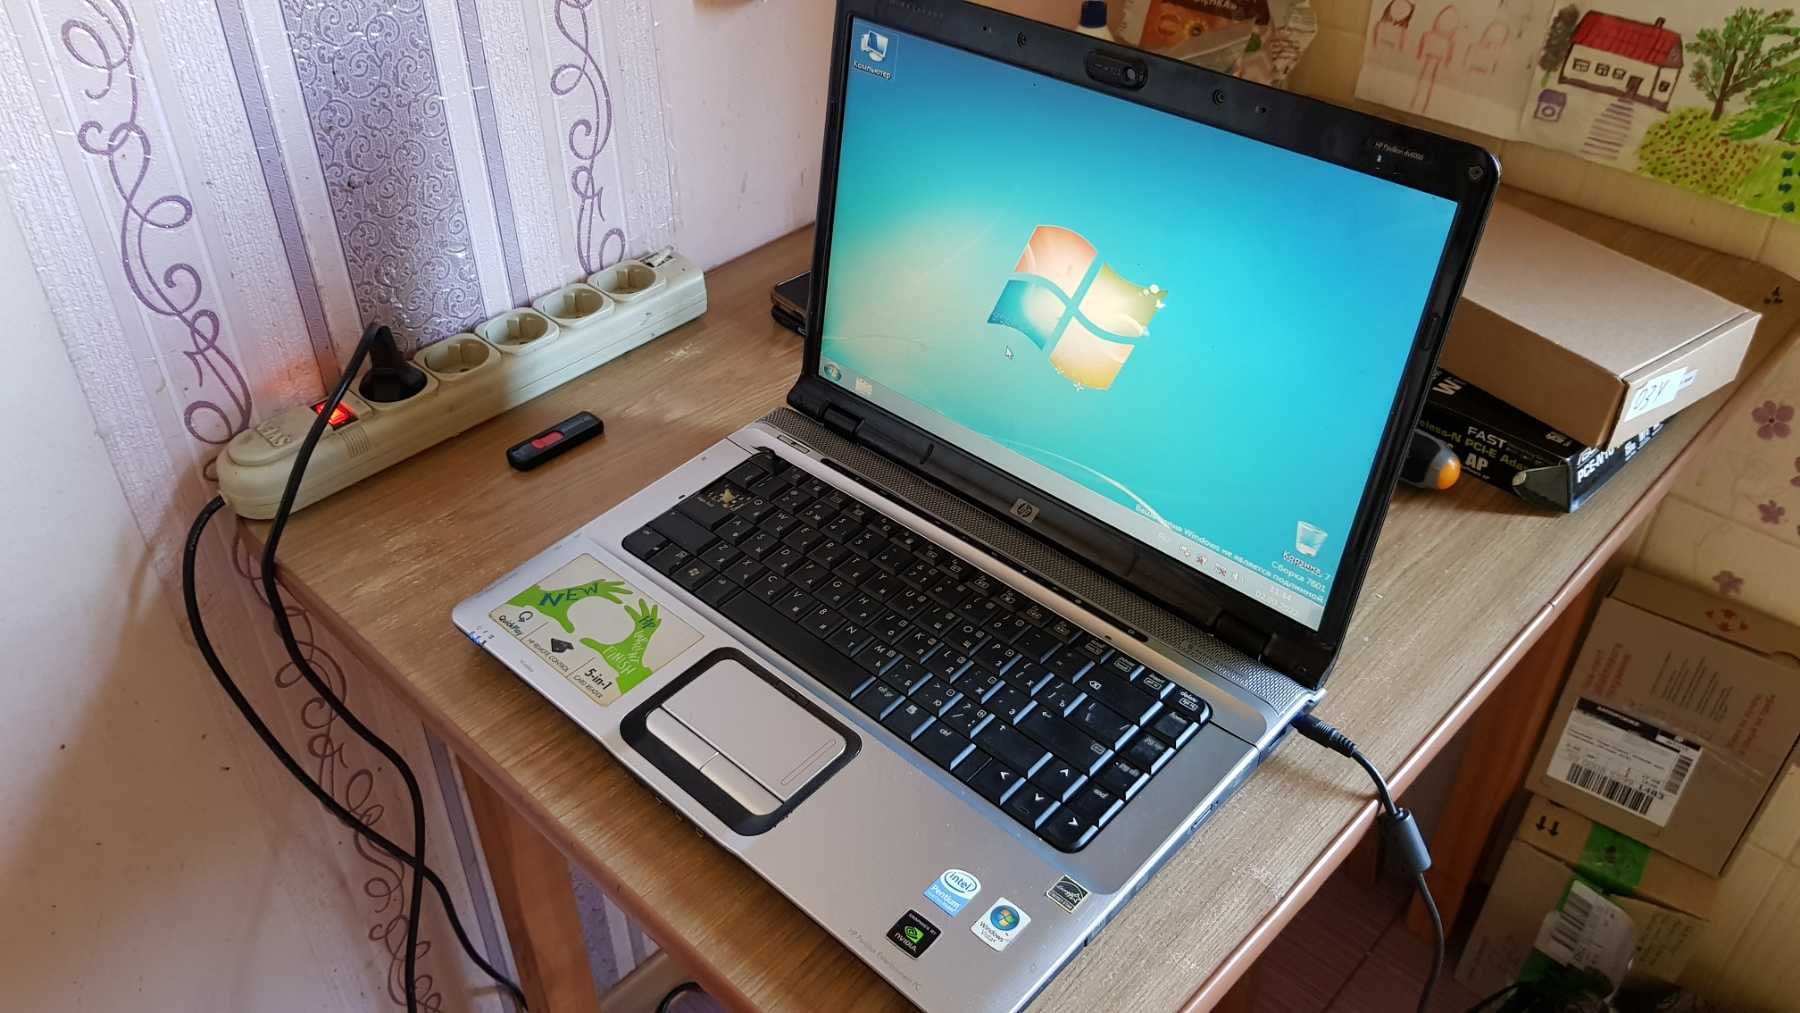 Ноутбук HP dv6700. Pentium Dual CPU T2390 2 ядра,HDD 160 Гб